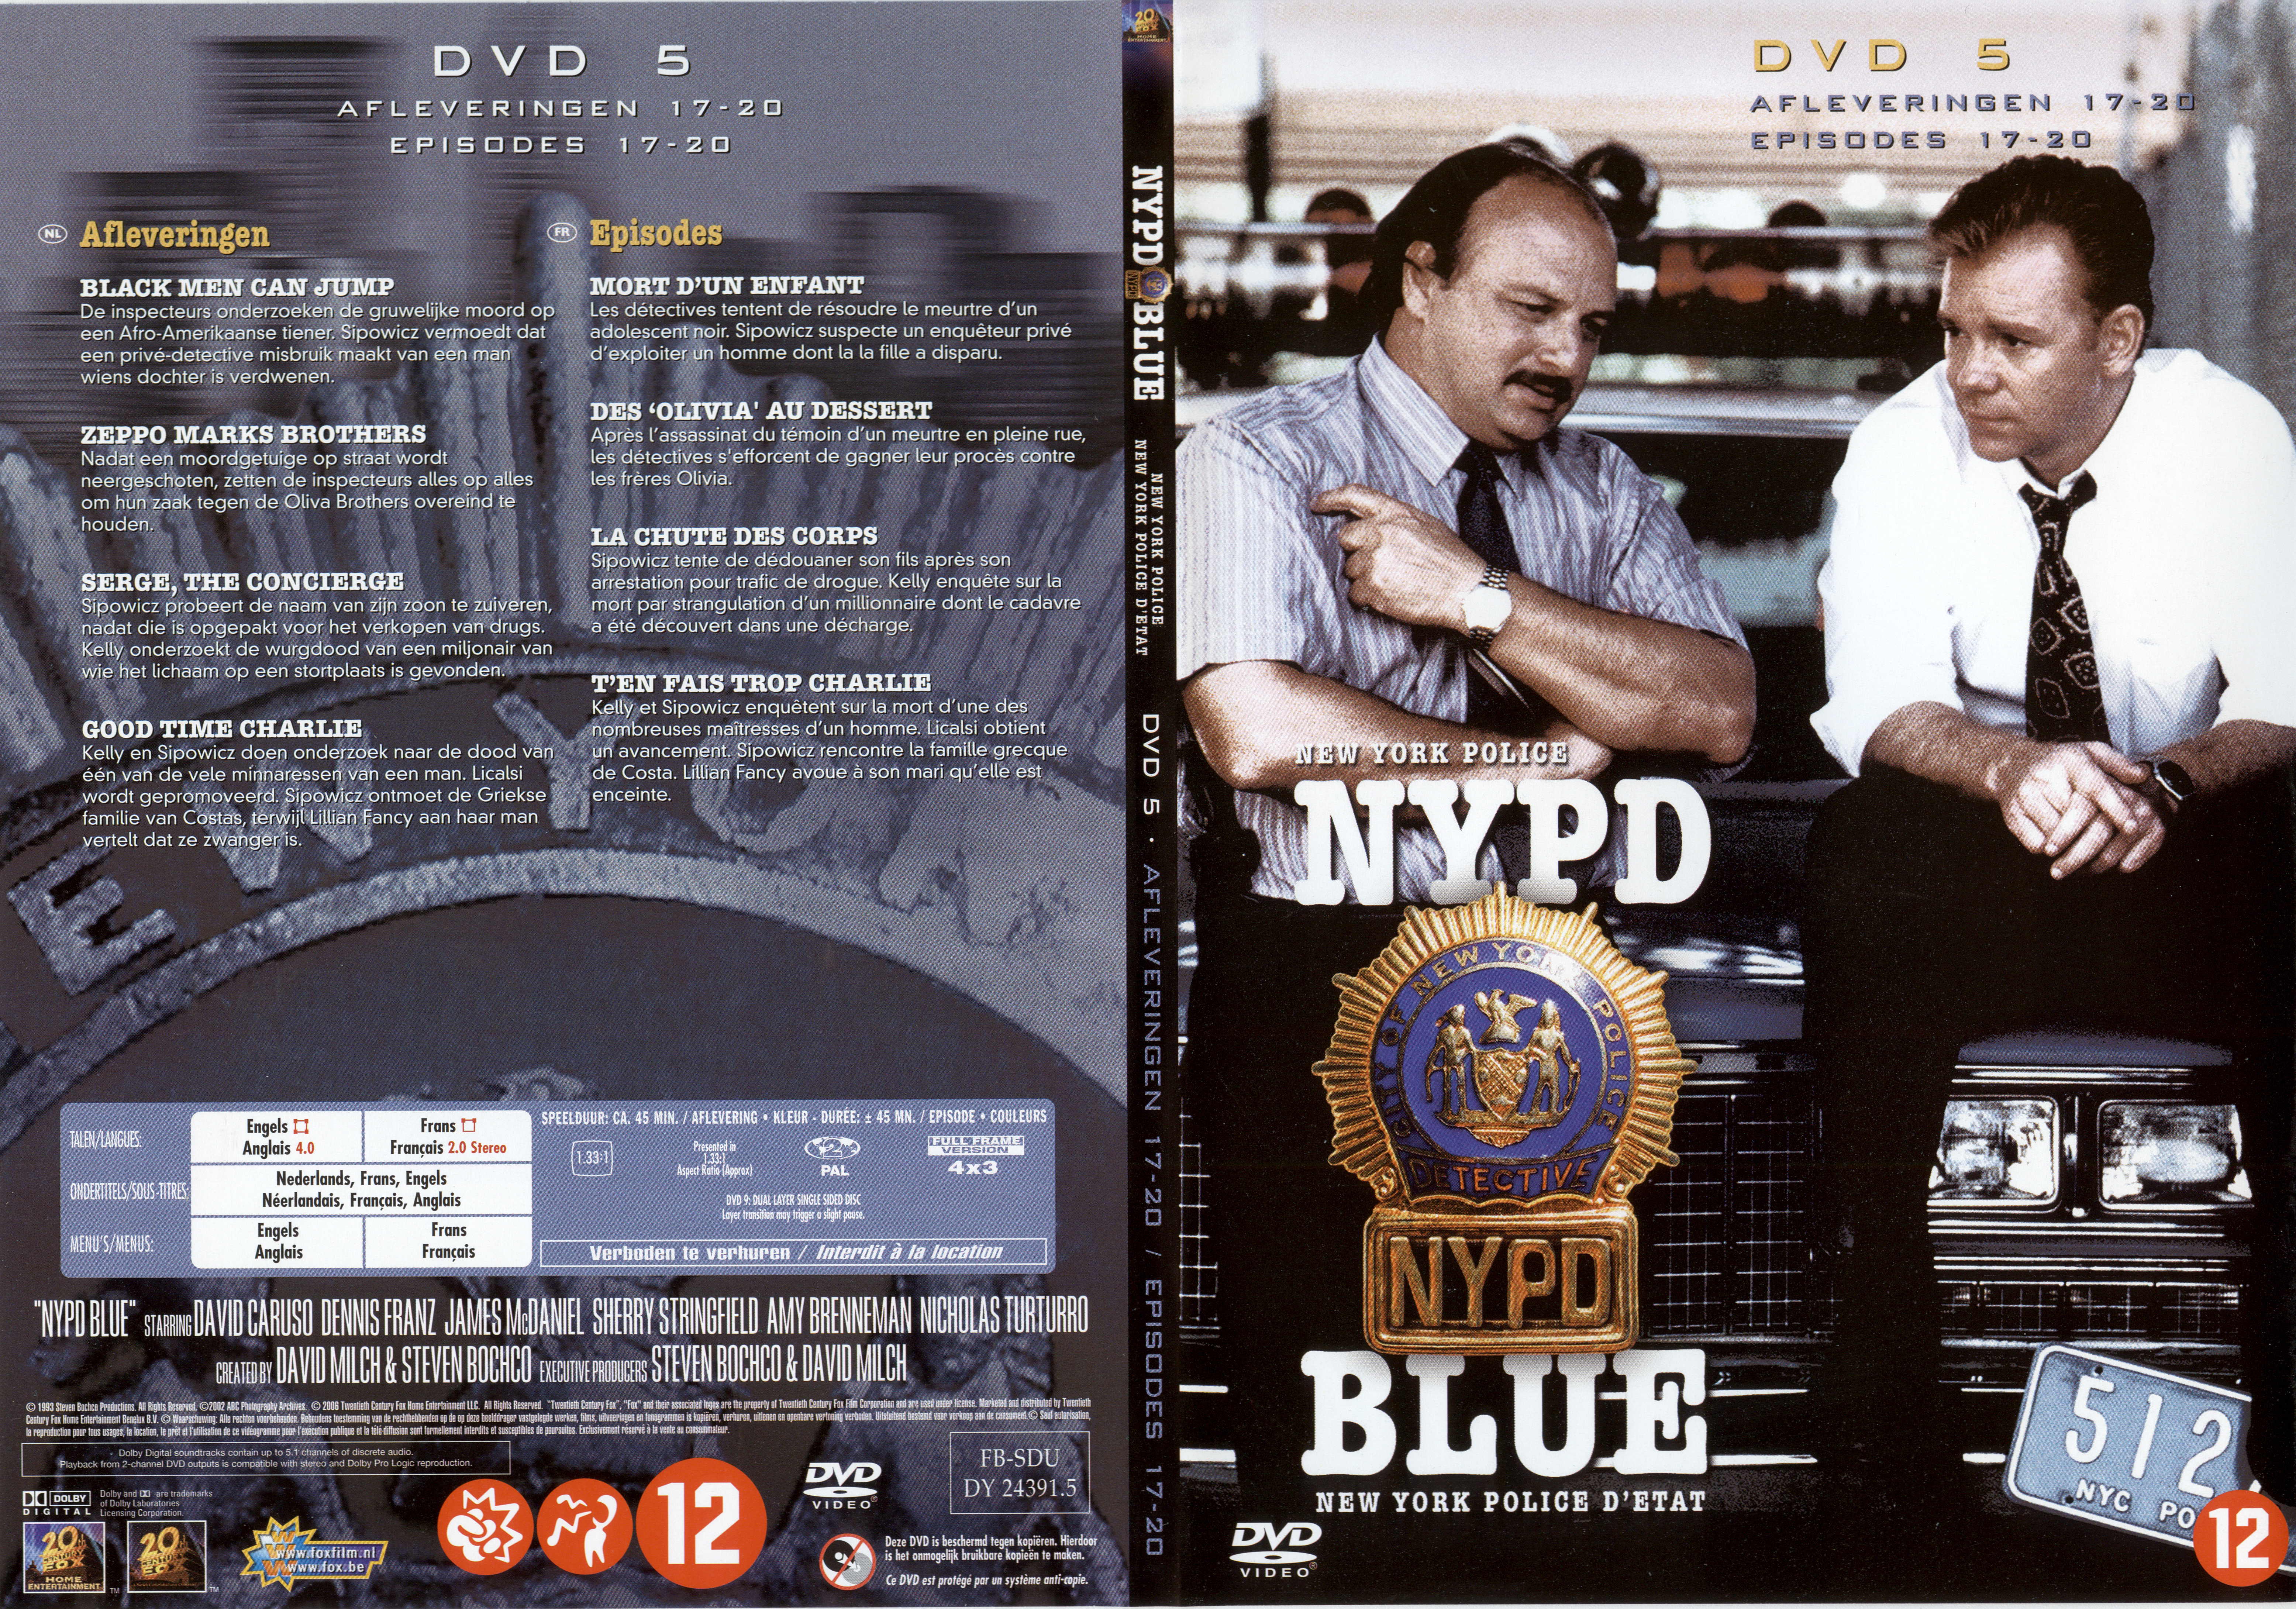 Jaquette DVD NYPD Blue saison 01 dvd 05 v2